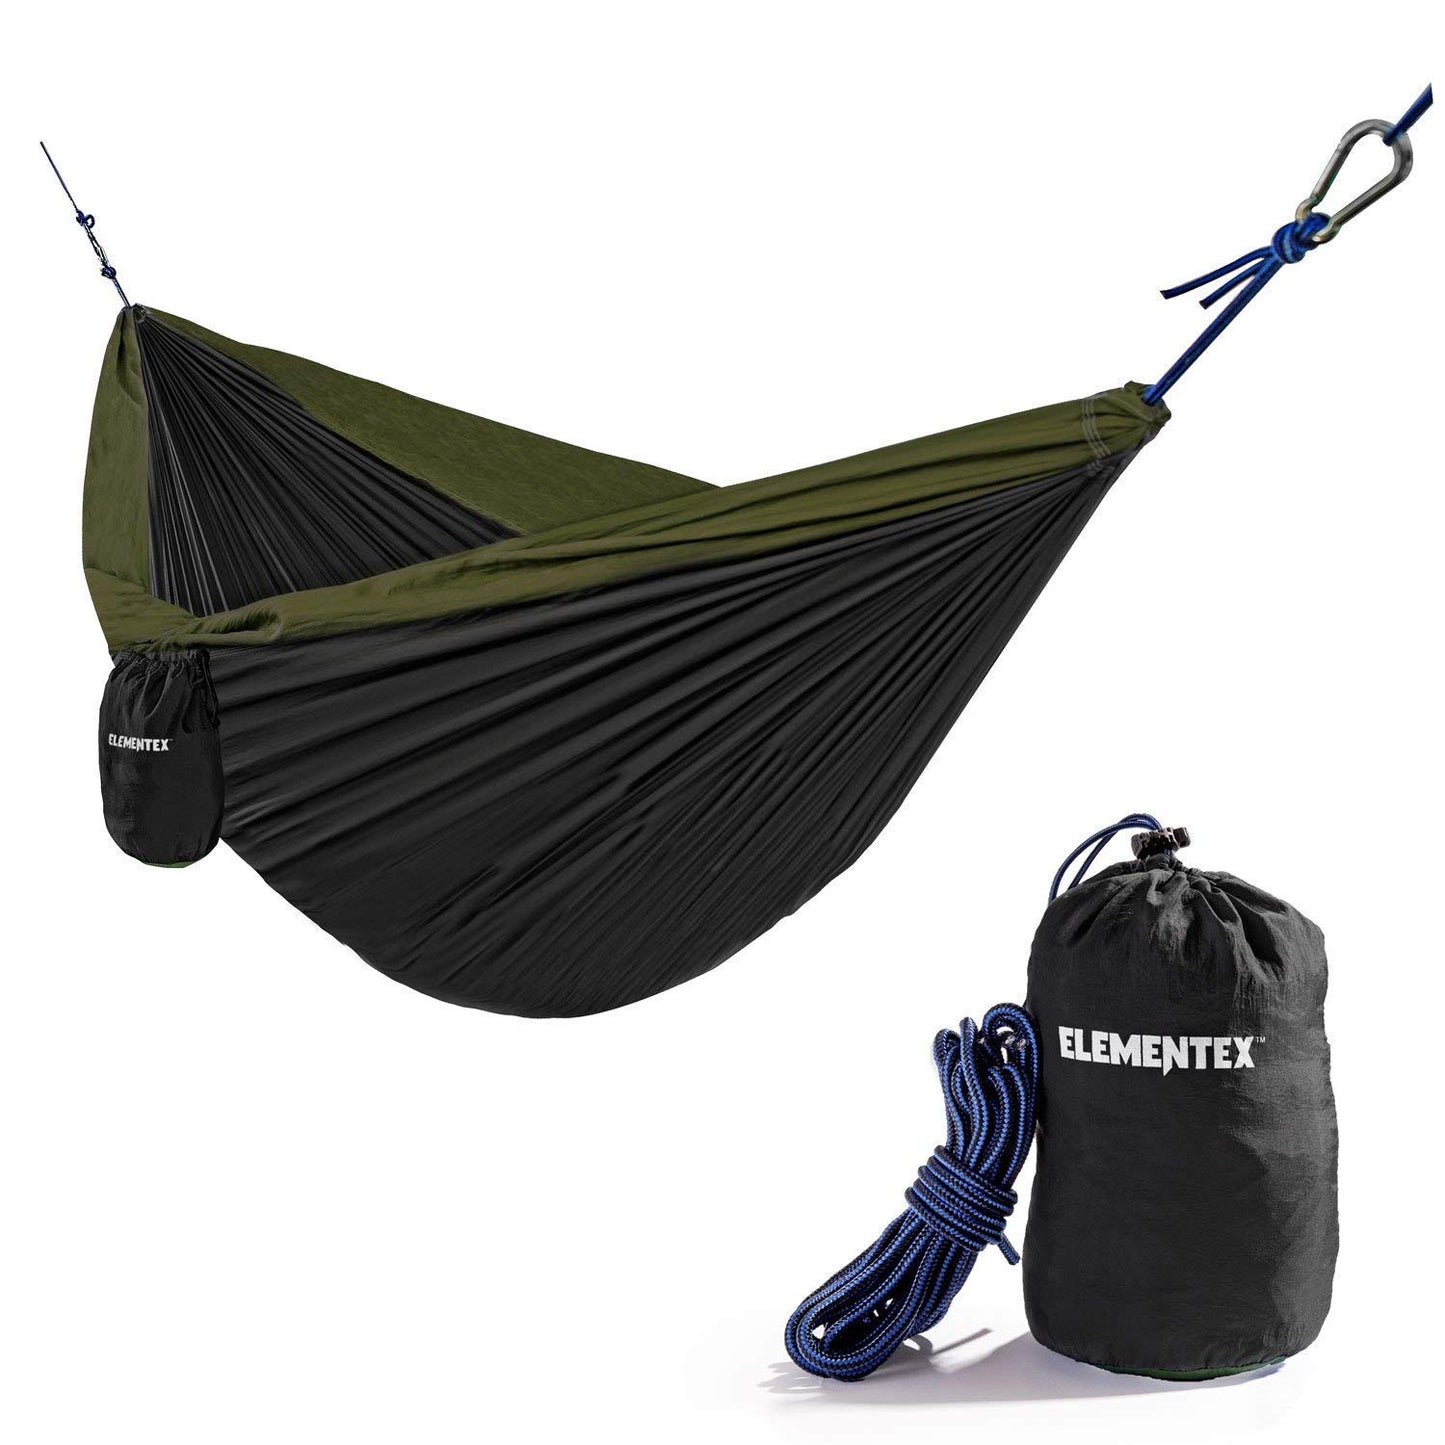 Parachute Nylon Travel Camping Hammock - ELEMENTEX